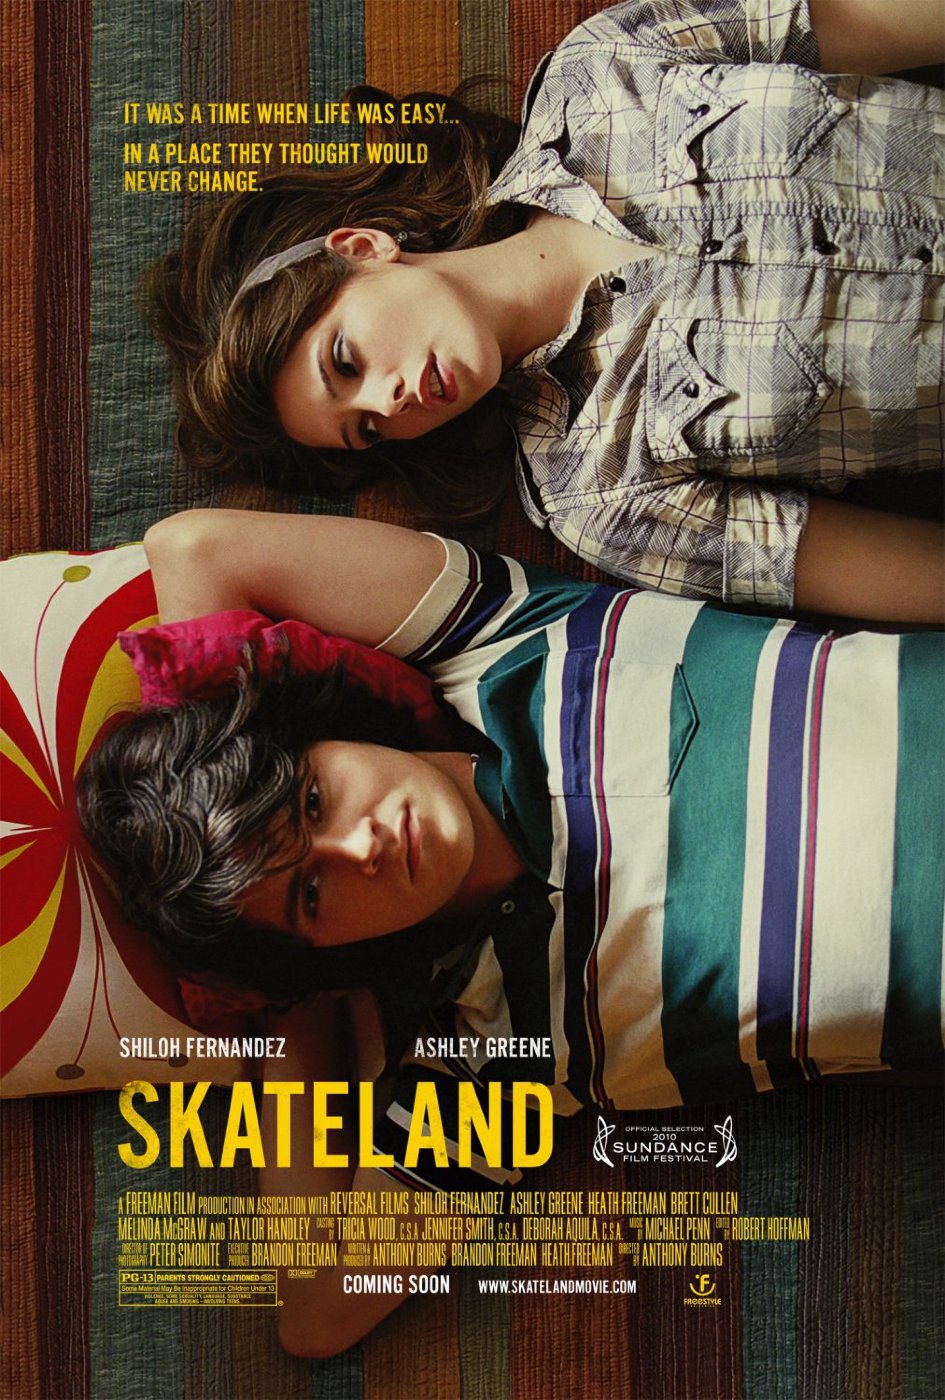  Skateland.2010.LIMITED.1080p.BluRay.x264-PSYCHD 6.56GB-1.jpeg